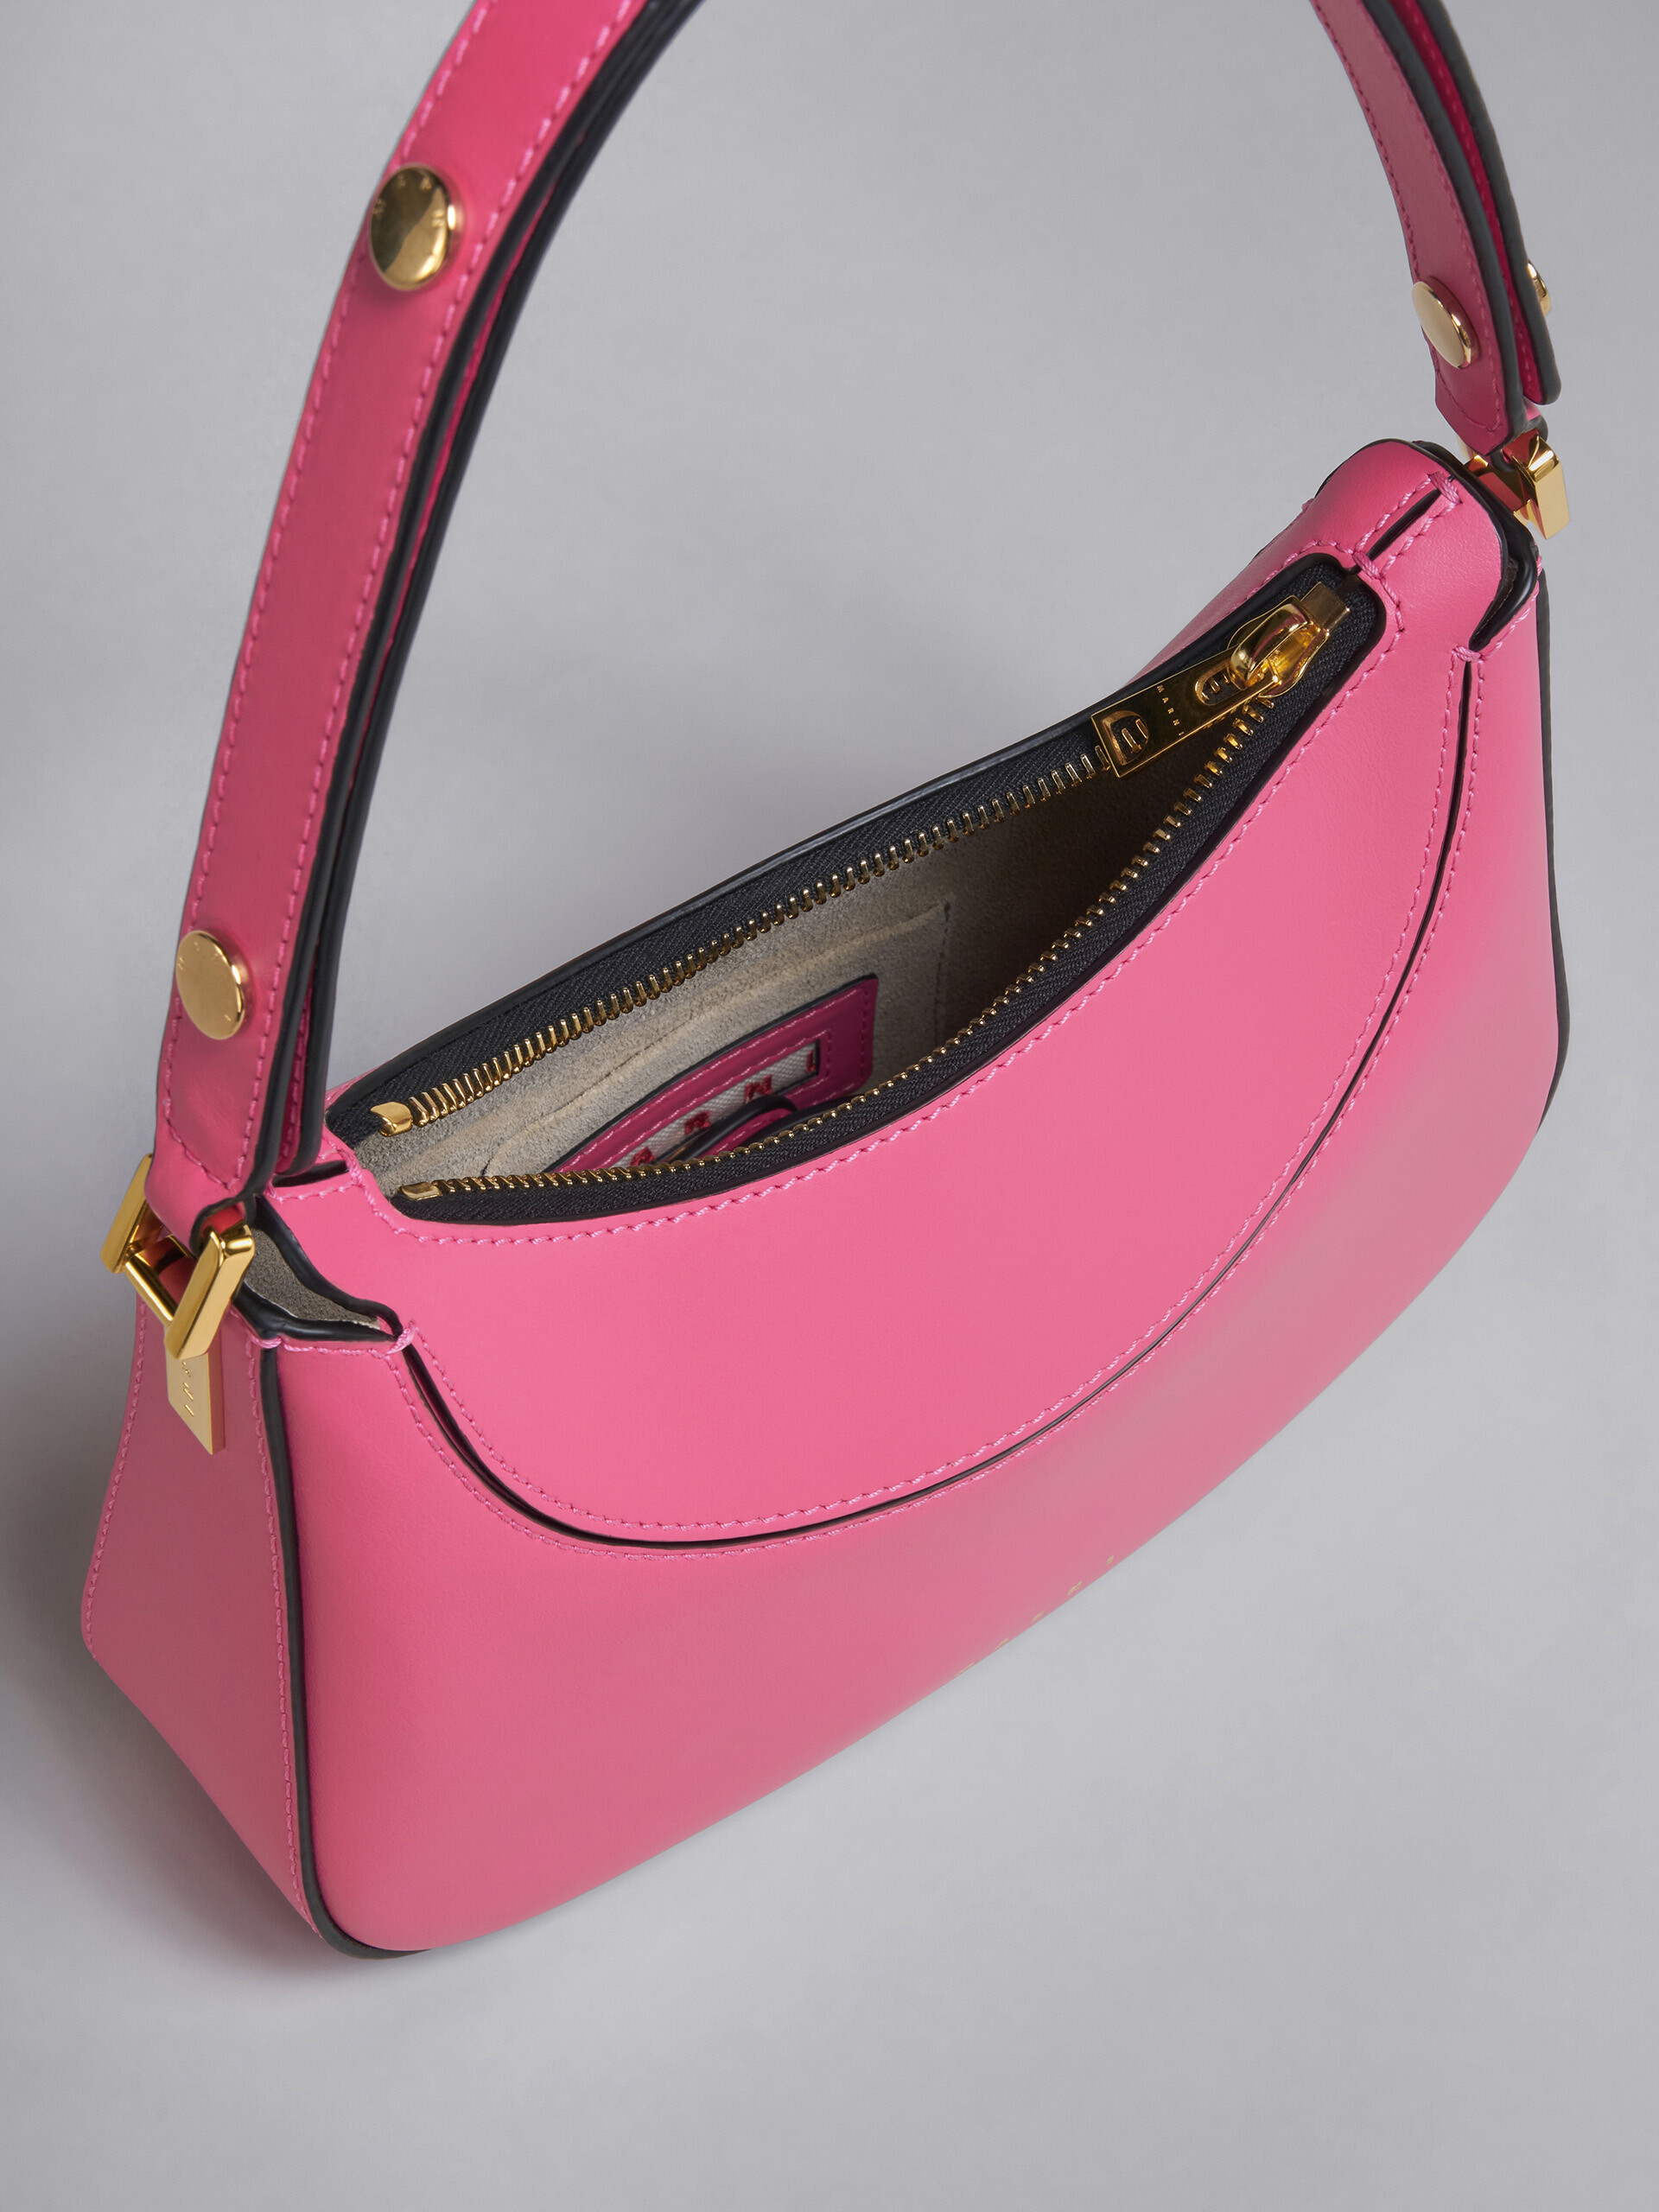 Milano mini bag in pink leather - Handbags - Image 4